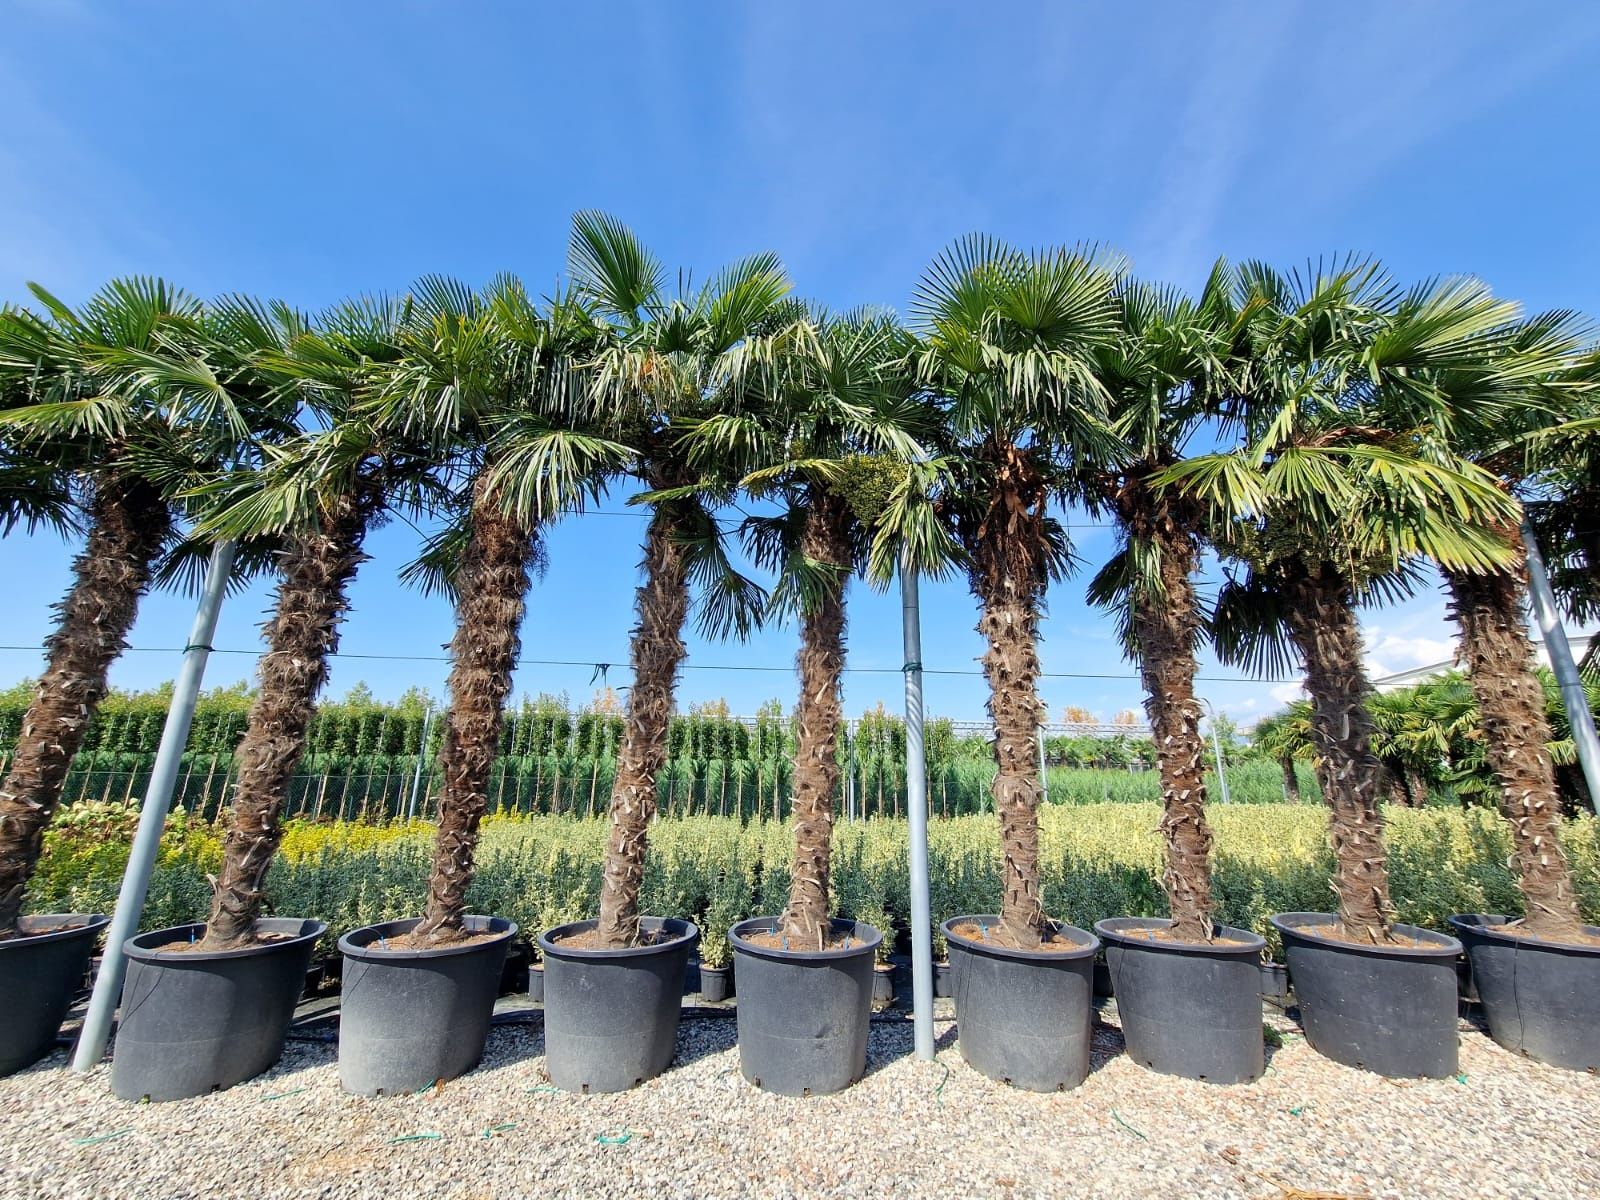 Palmieri 5m extra calitate rezistenti la îngheț, vand, livrez, montez